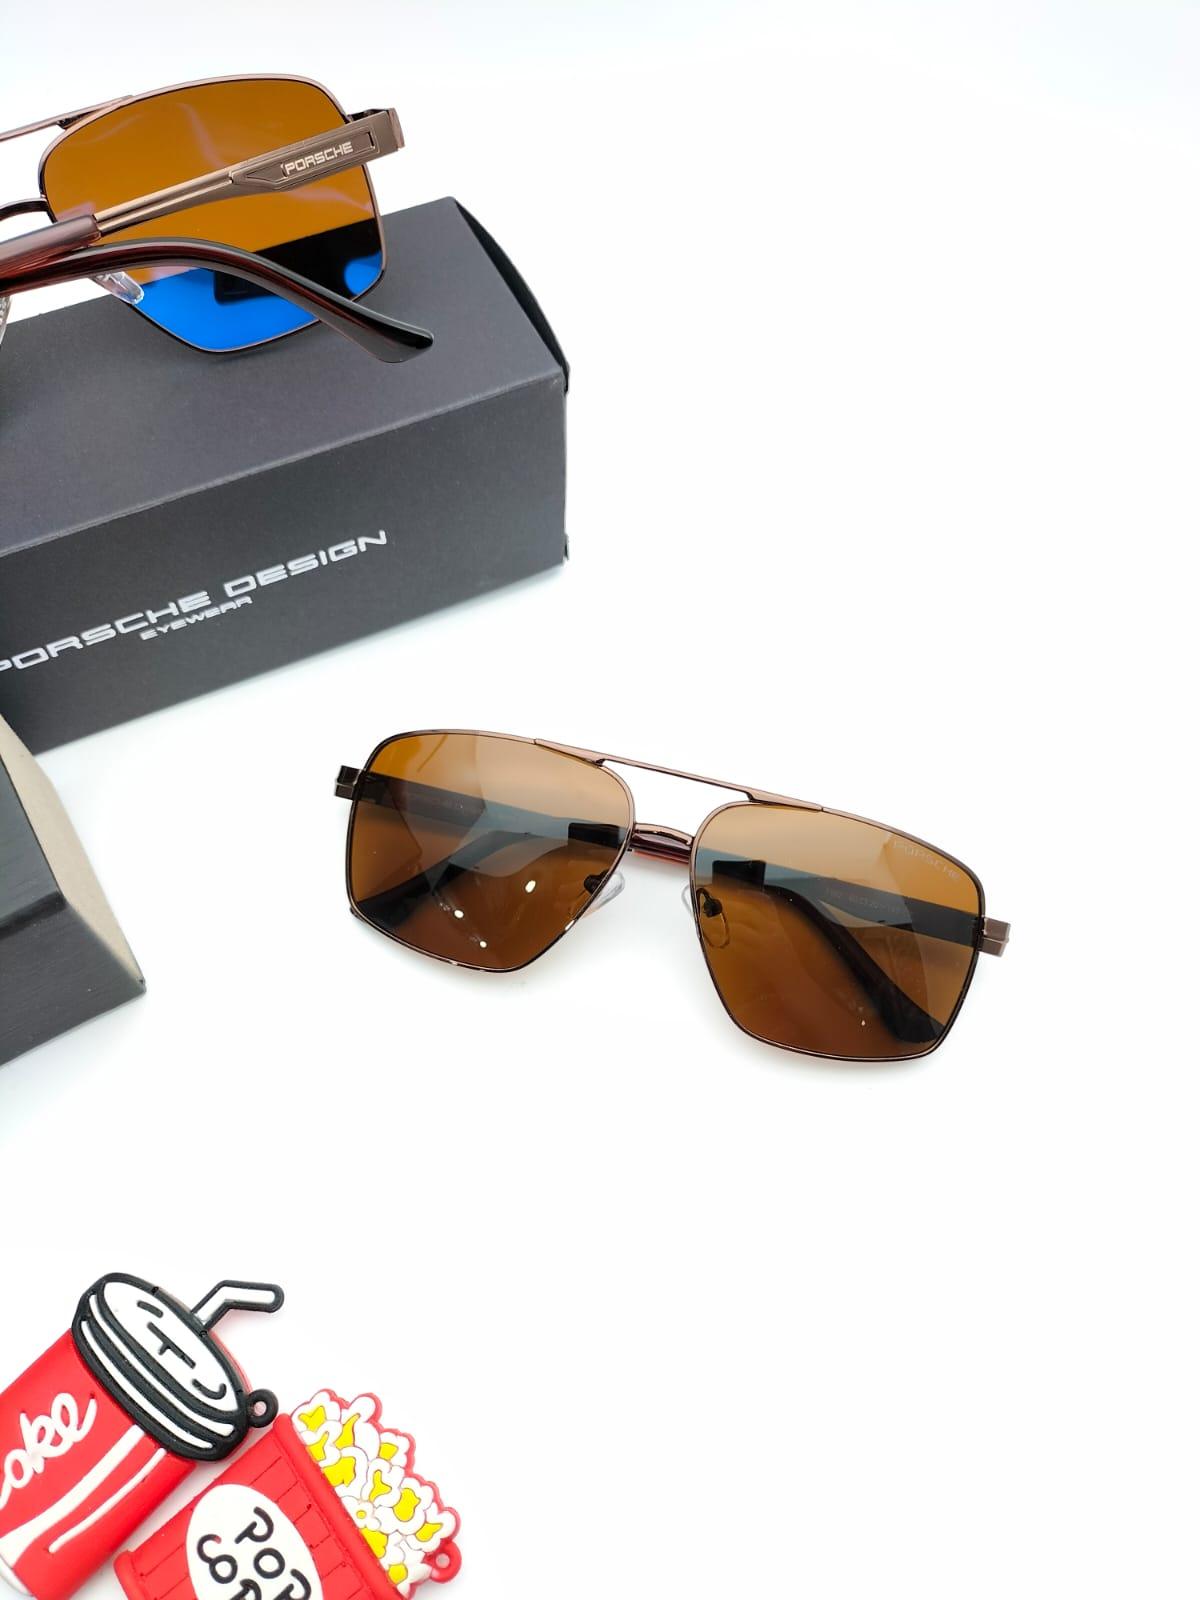 Porsche Design - Customized Prescription Sunglasses and Spectacles